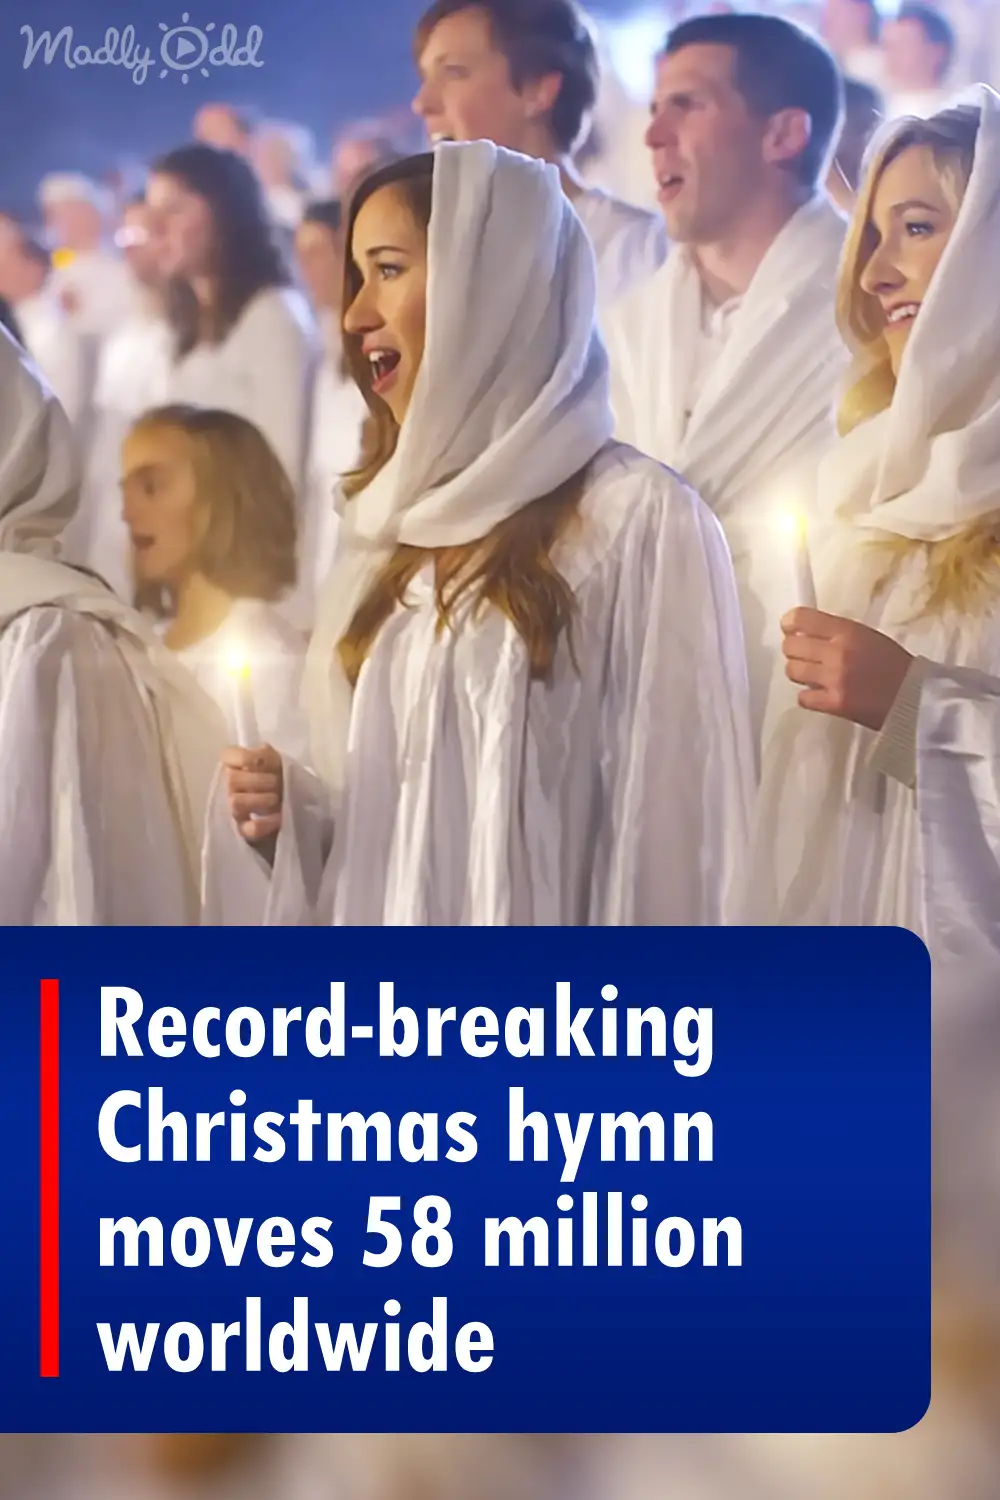 Record-breaking Christmas hymn moves 58 million worldwide